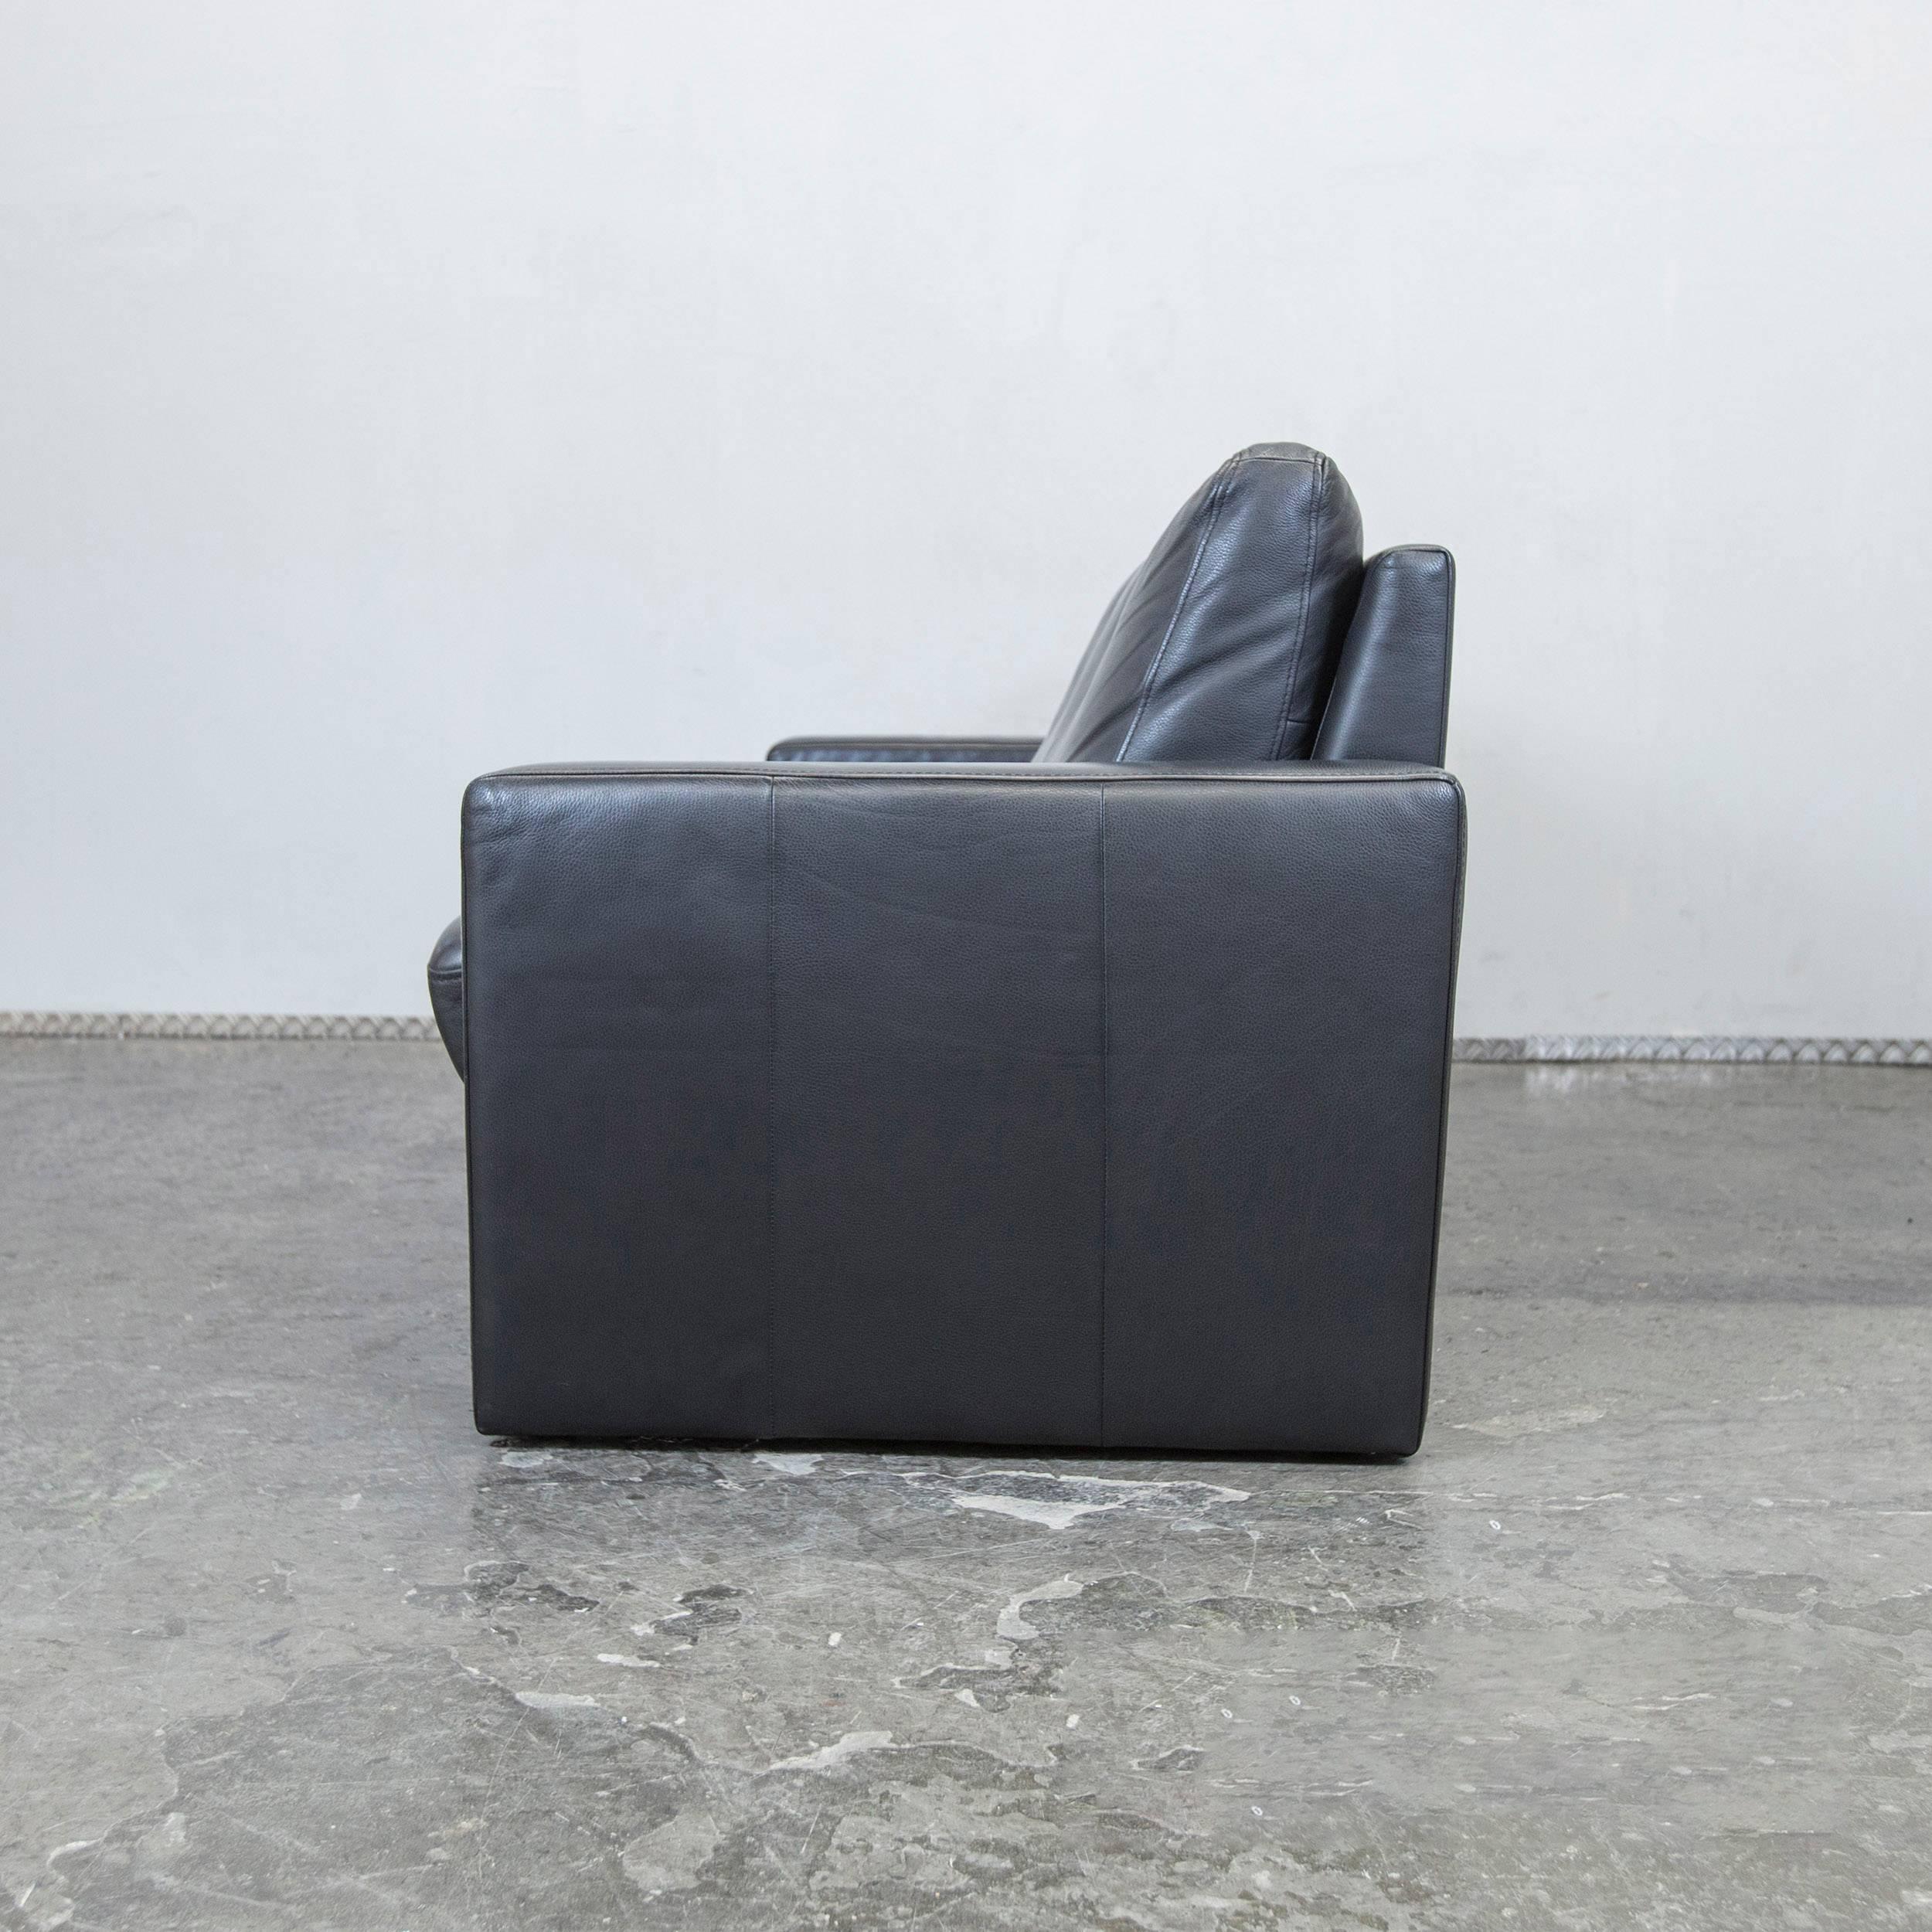 Contemporary Külkens & Sohn Designer Leather Sofa Black Three-Seat Couch Modern